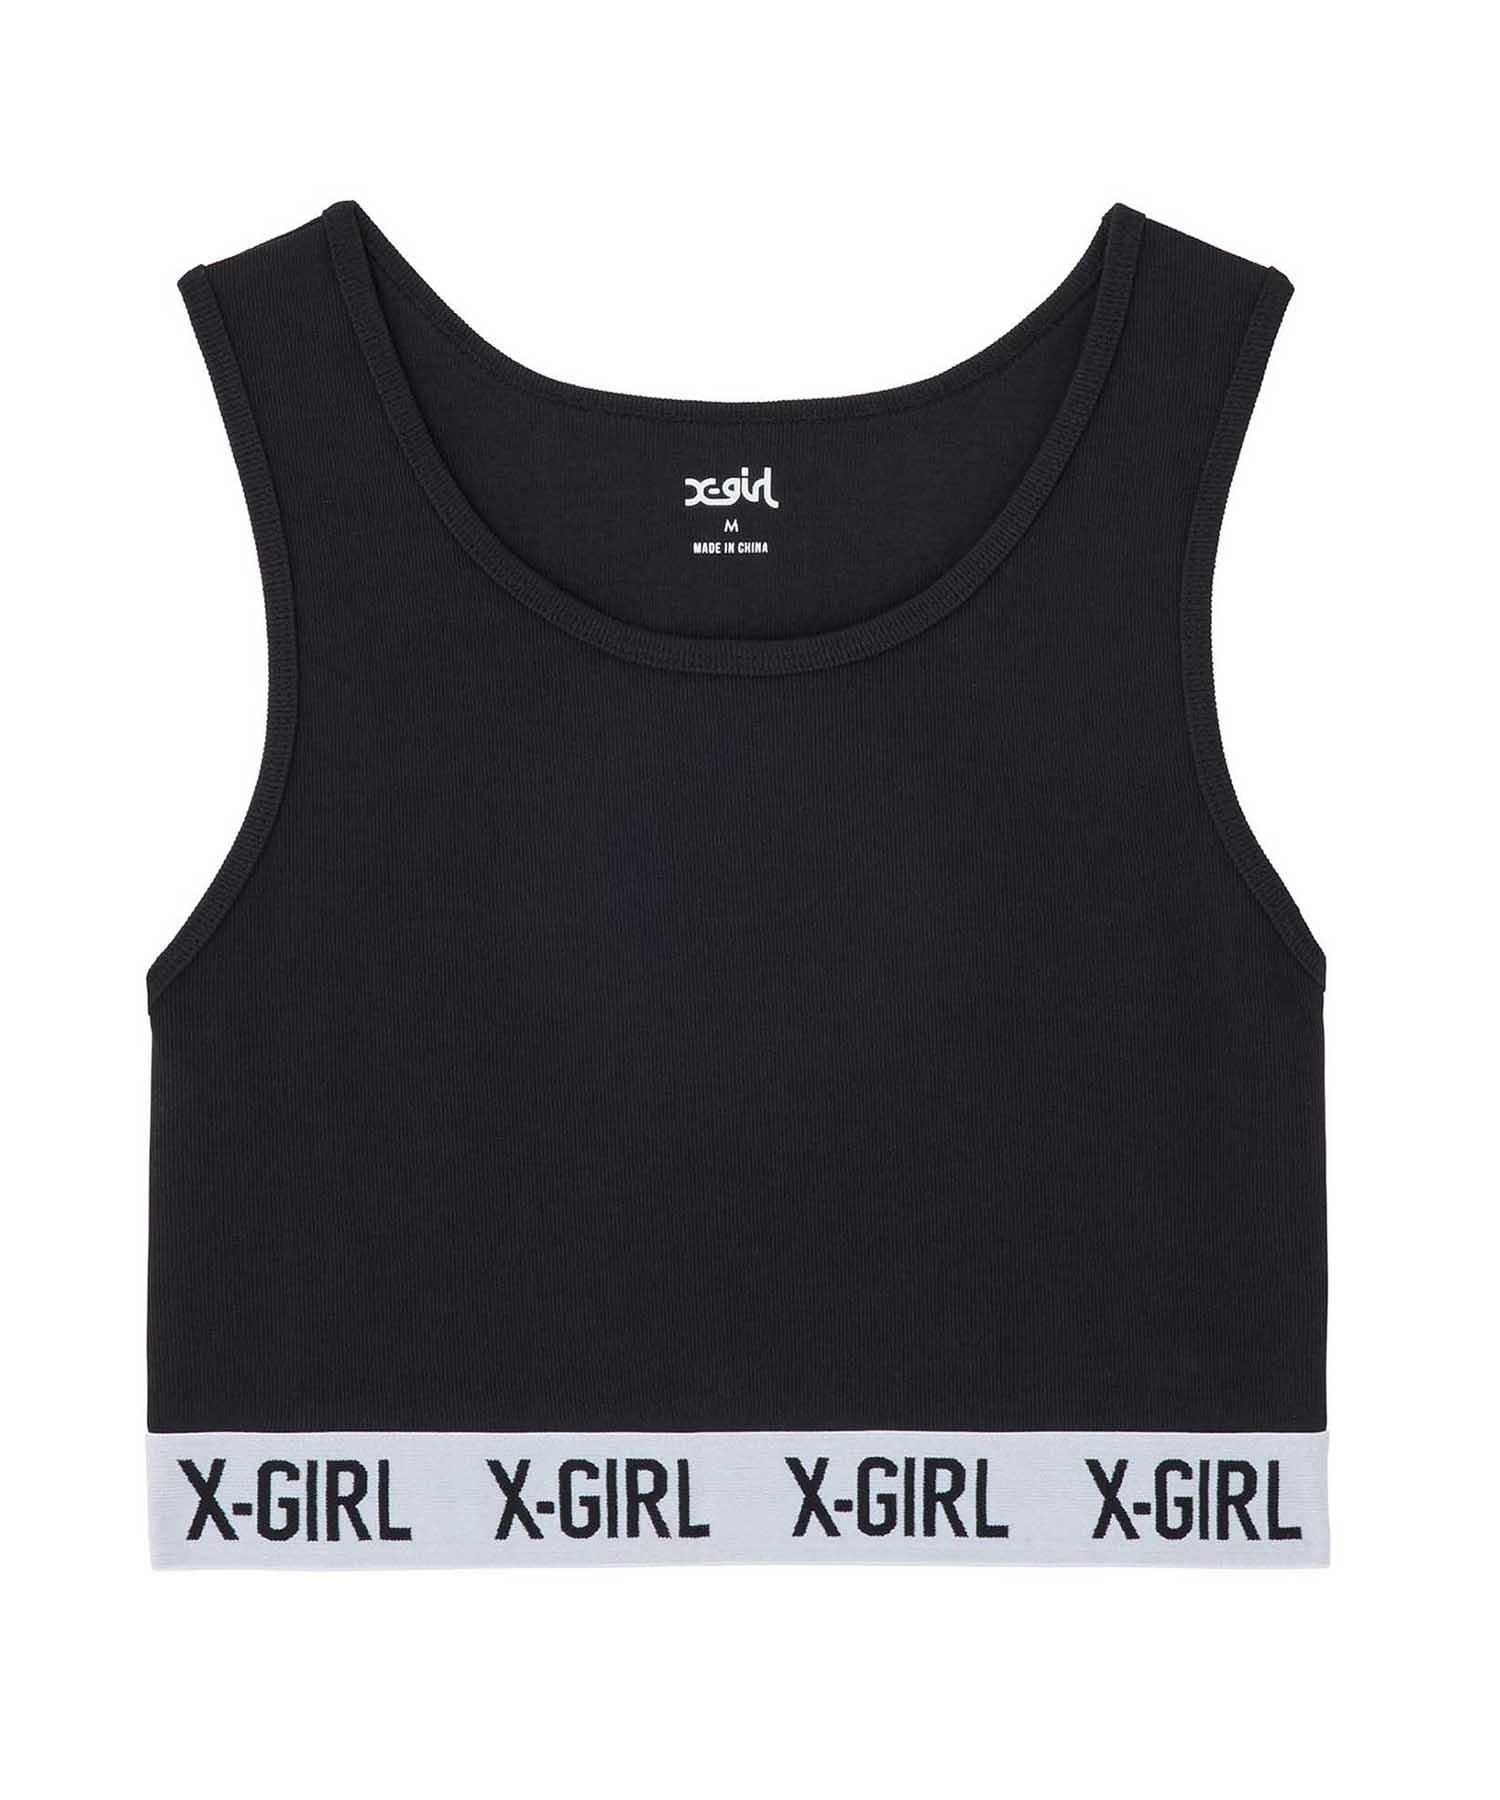 X-GIRL - Logo Tank Top - (Black) by X-GIRL